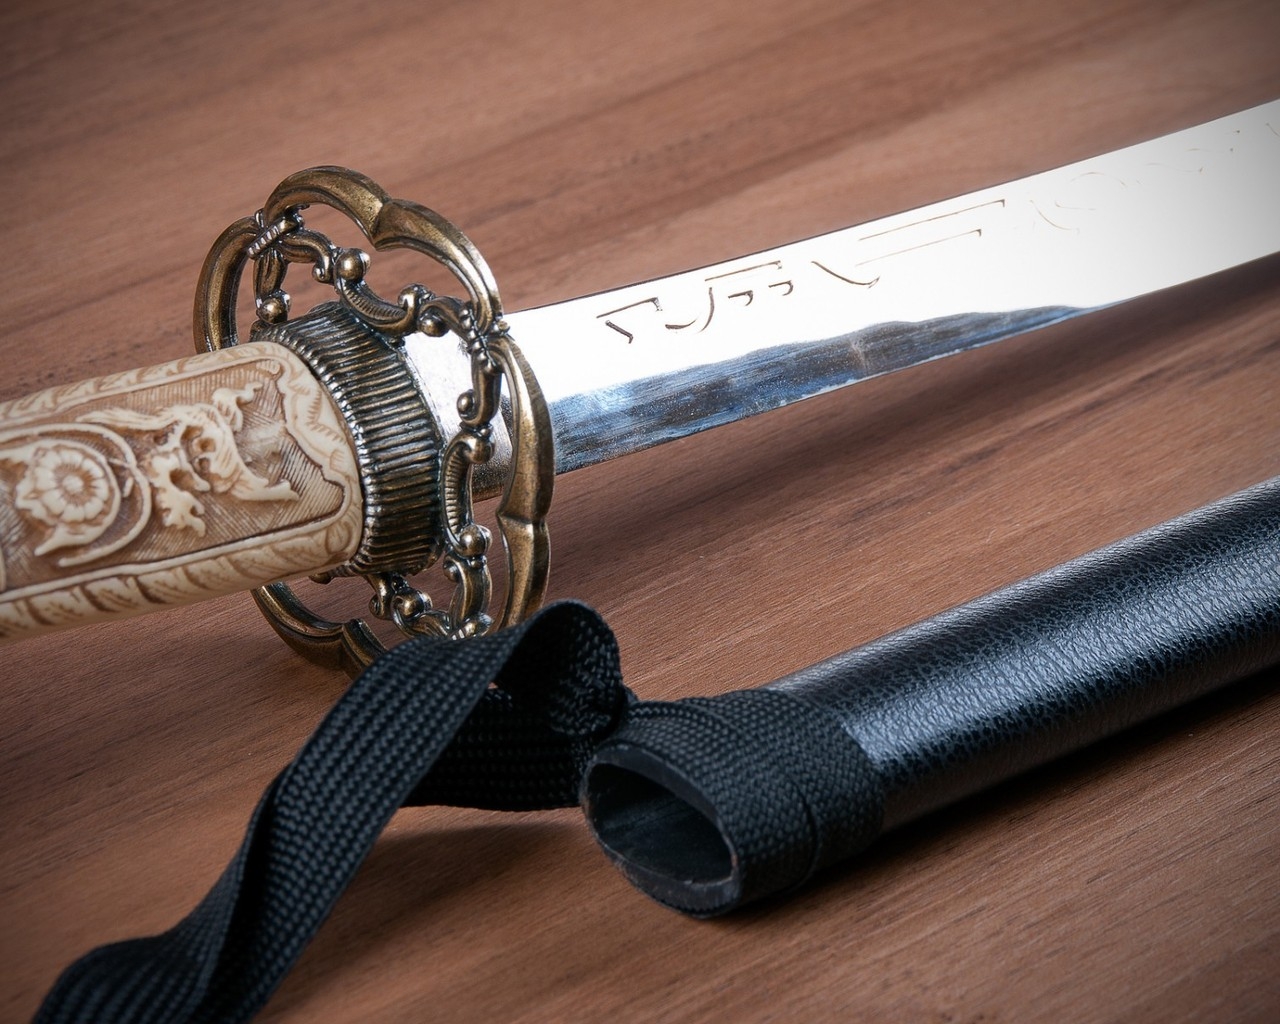 Katana Japanese Sword for 1280 x 1024 resolution